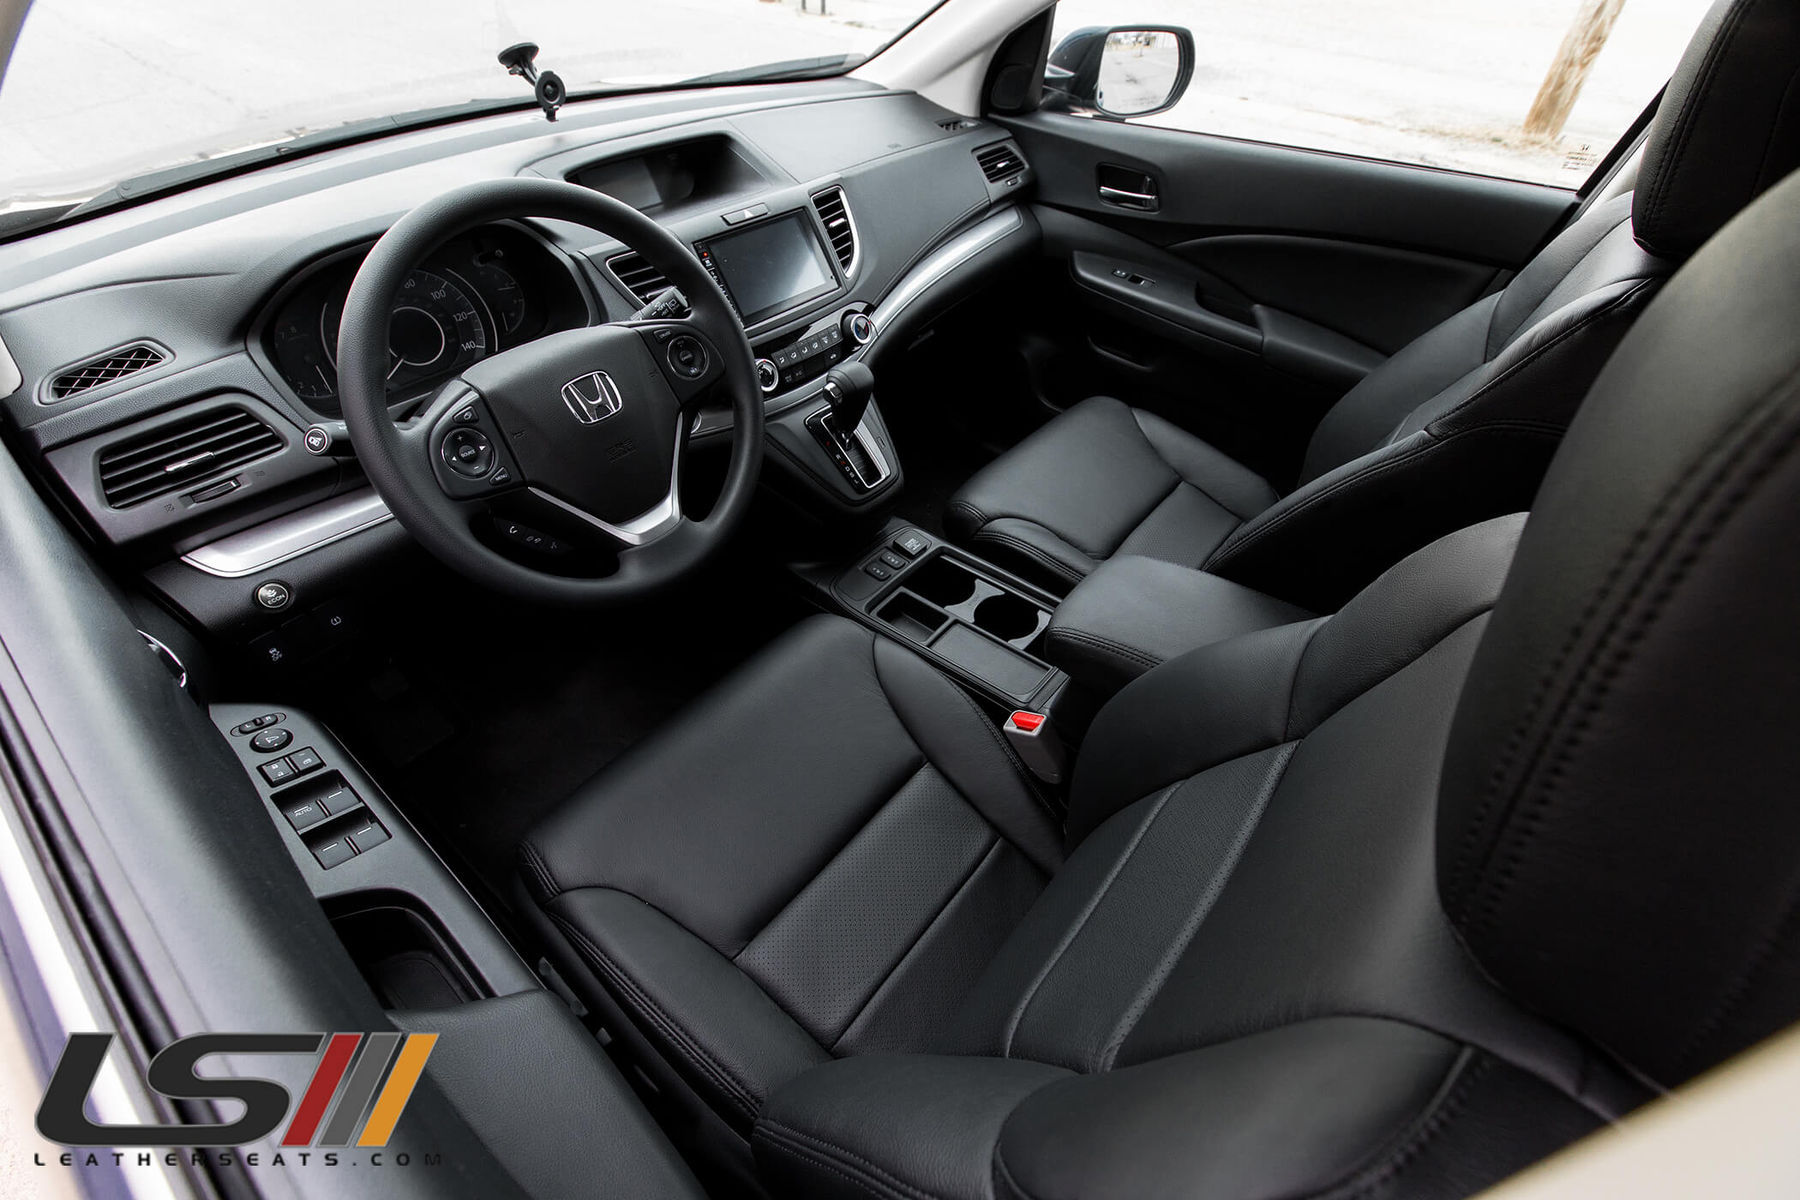 2015 Honda Cr V Interior By Leatherseats Com